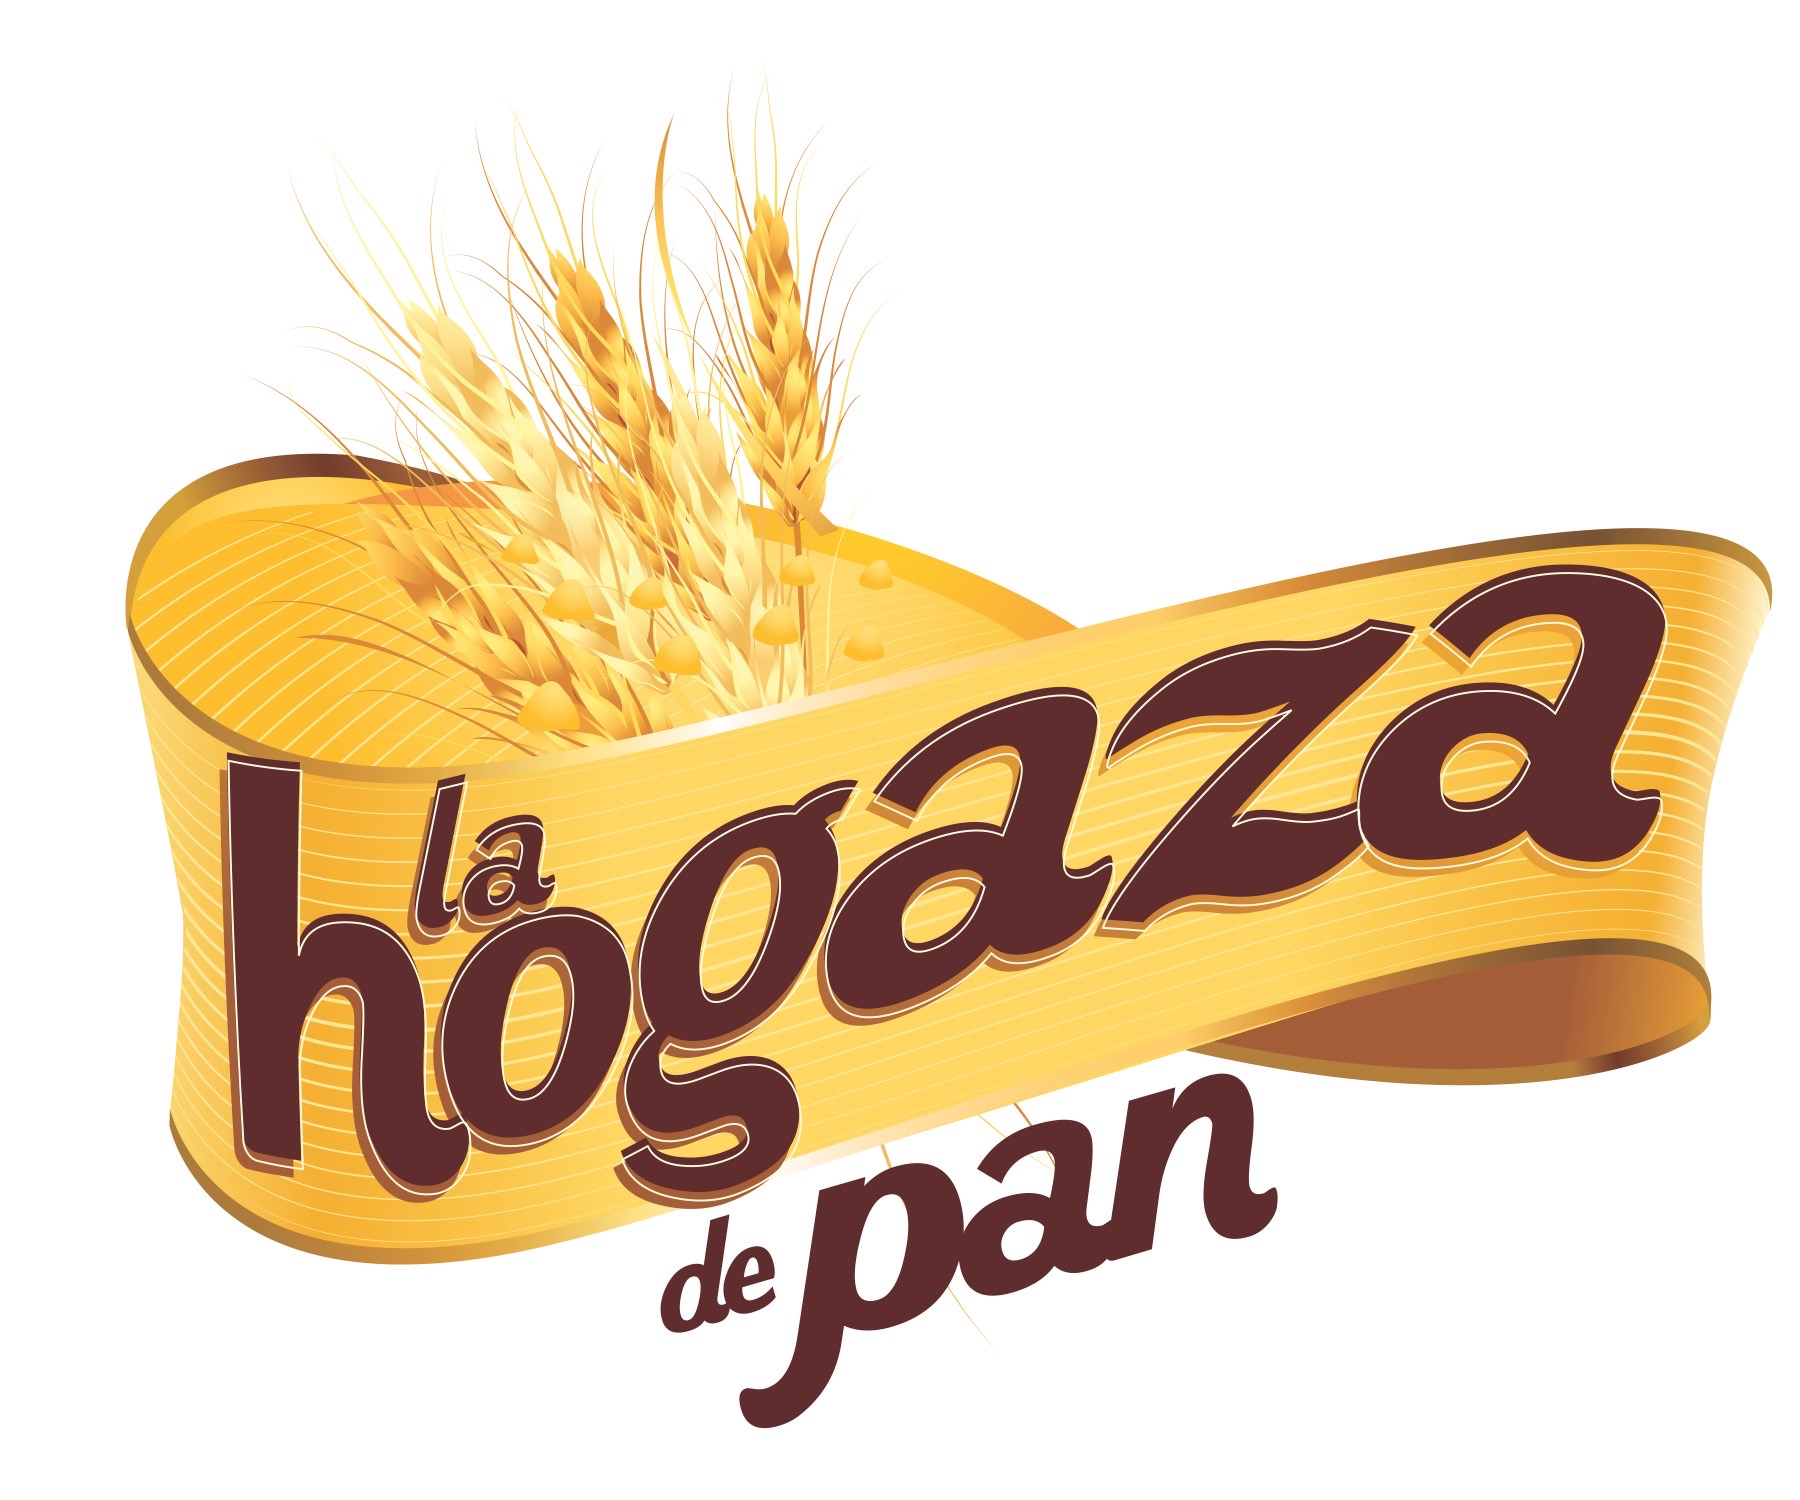 La Hogaza de Pan